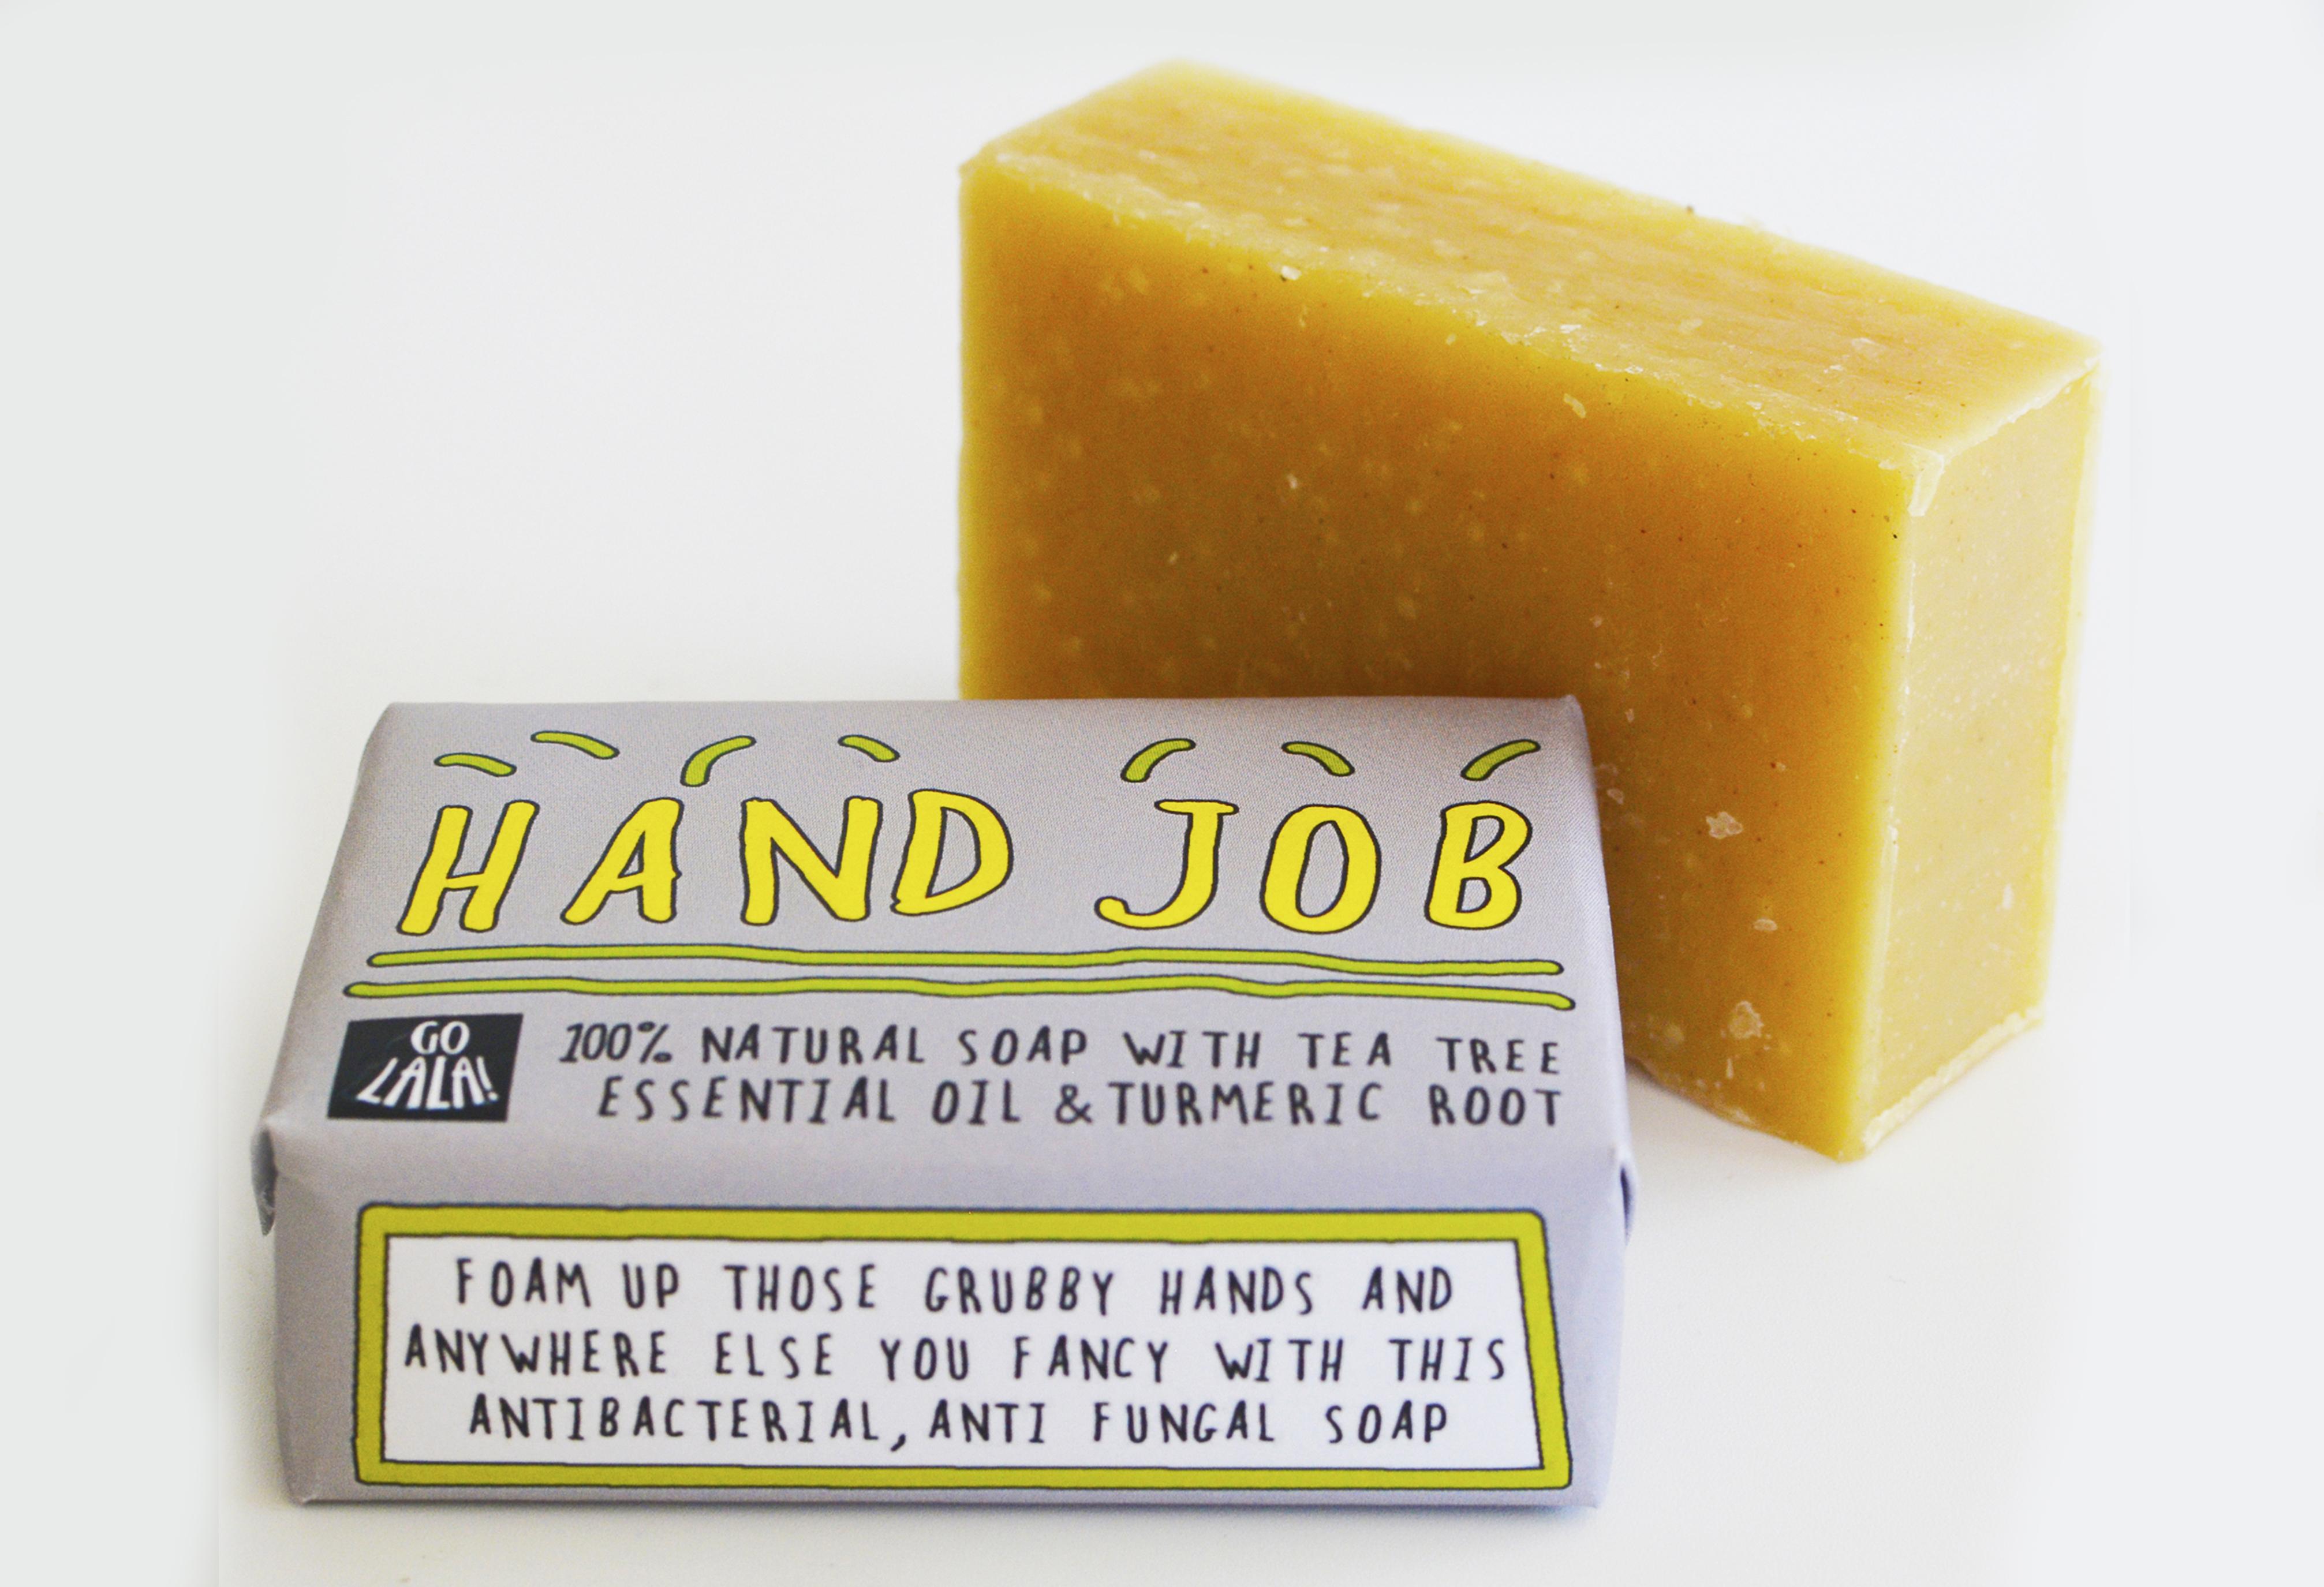 Go Lala Hand Job Soap